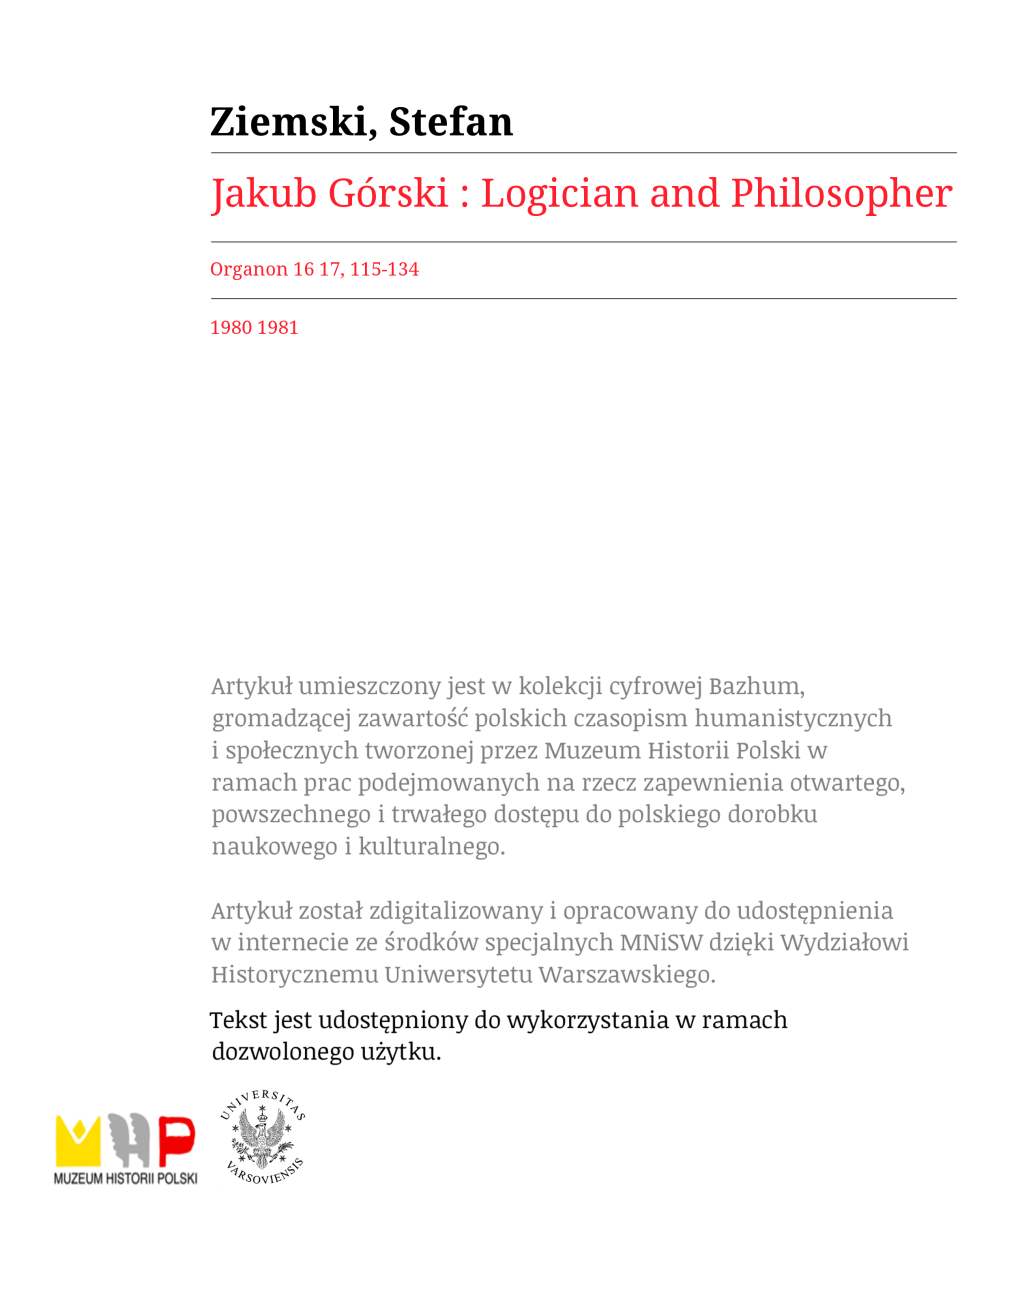 Jakub Górski: Logician and Philosopher